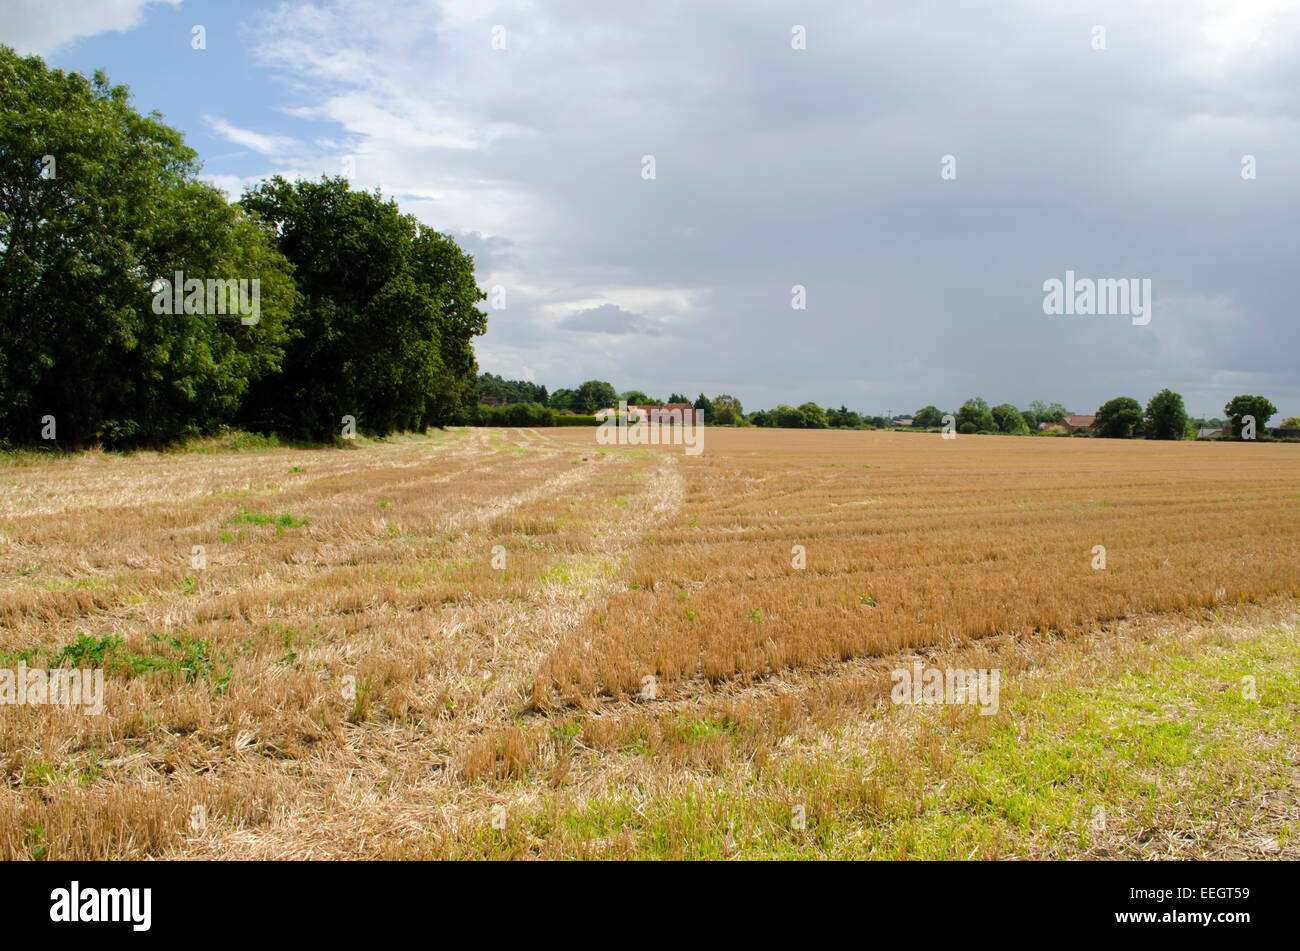 A farmer's field in South Walsham near to the Norfolk Broads Stock Photo